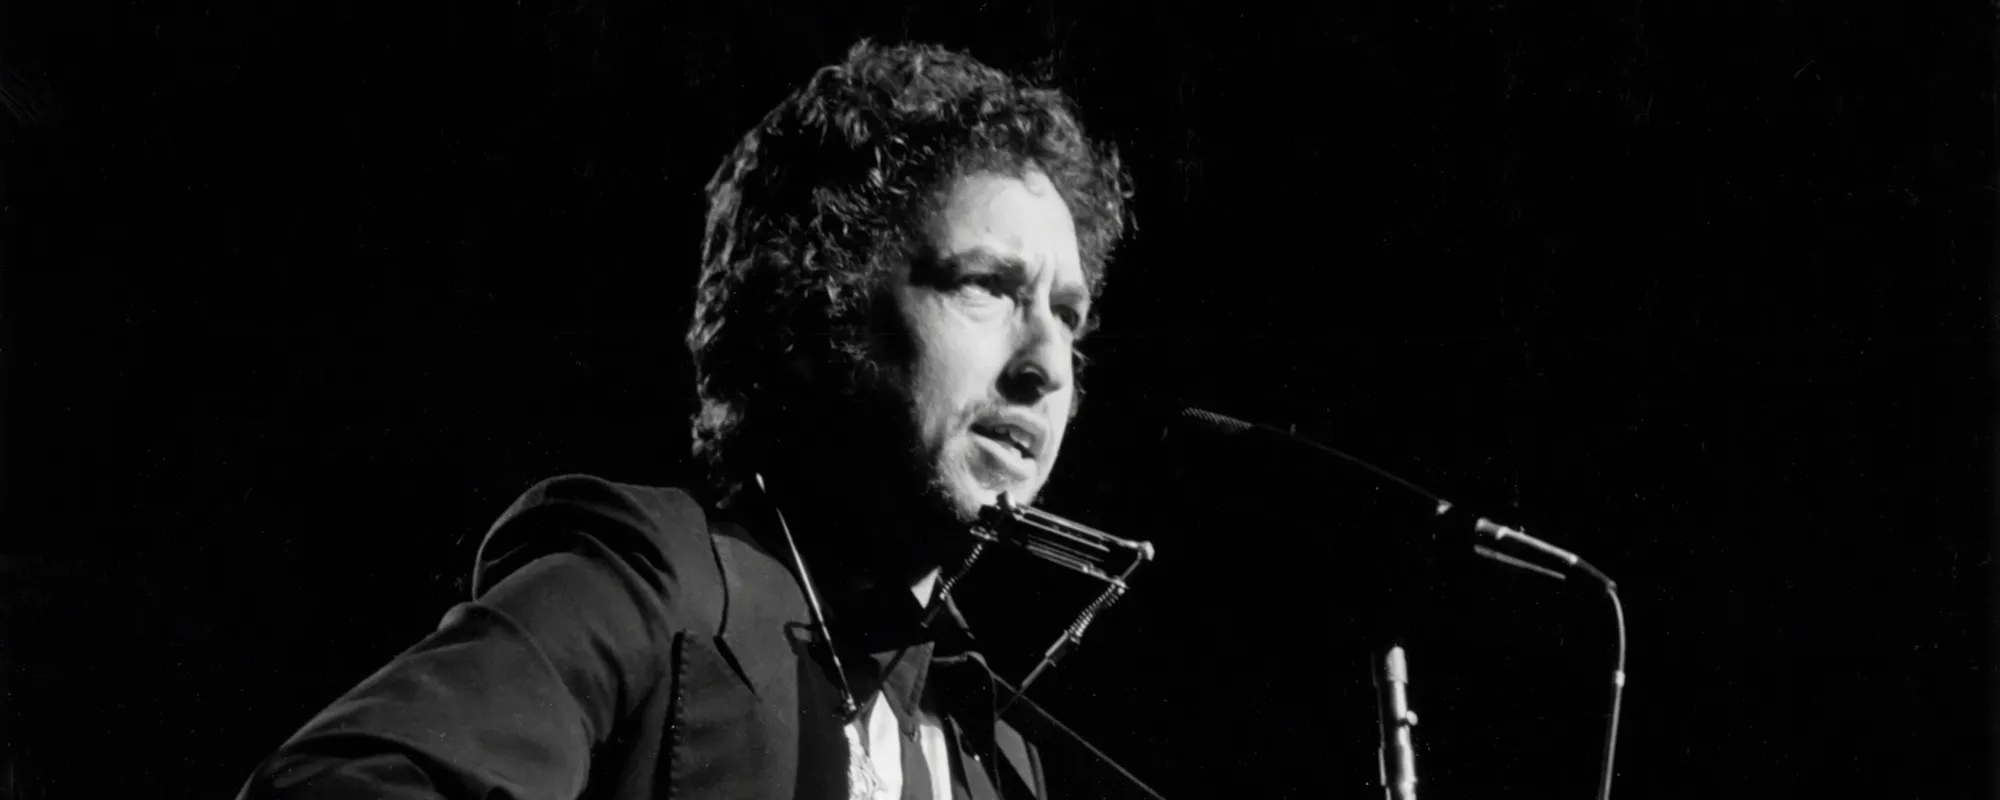 Bob Dylan 1965 Sexual Abuse Case Dismissed